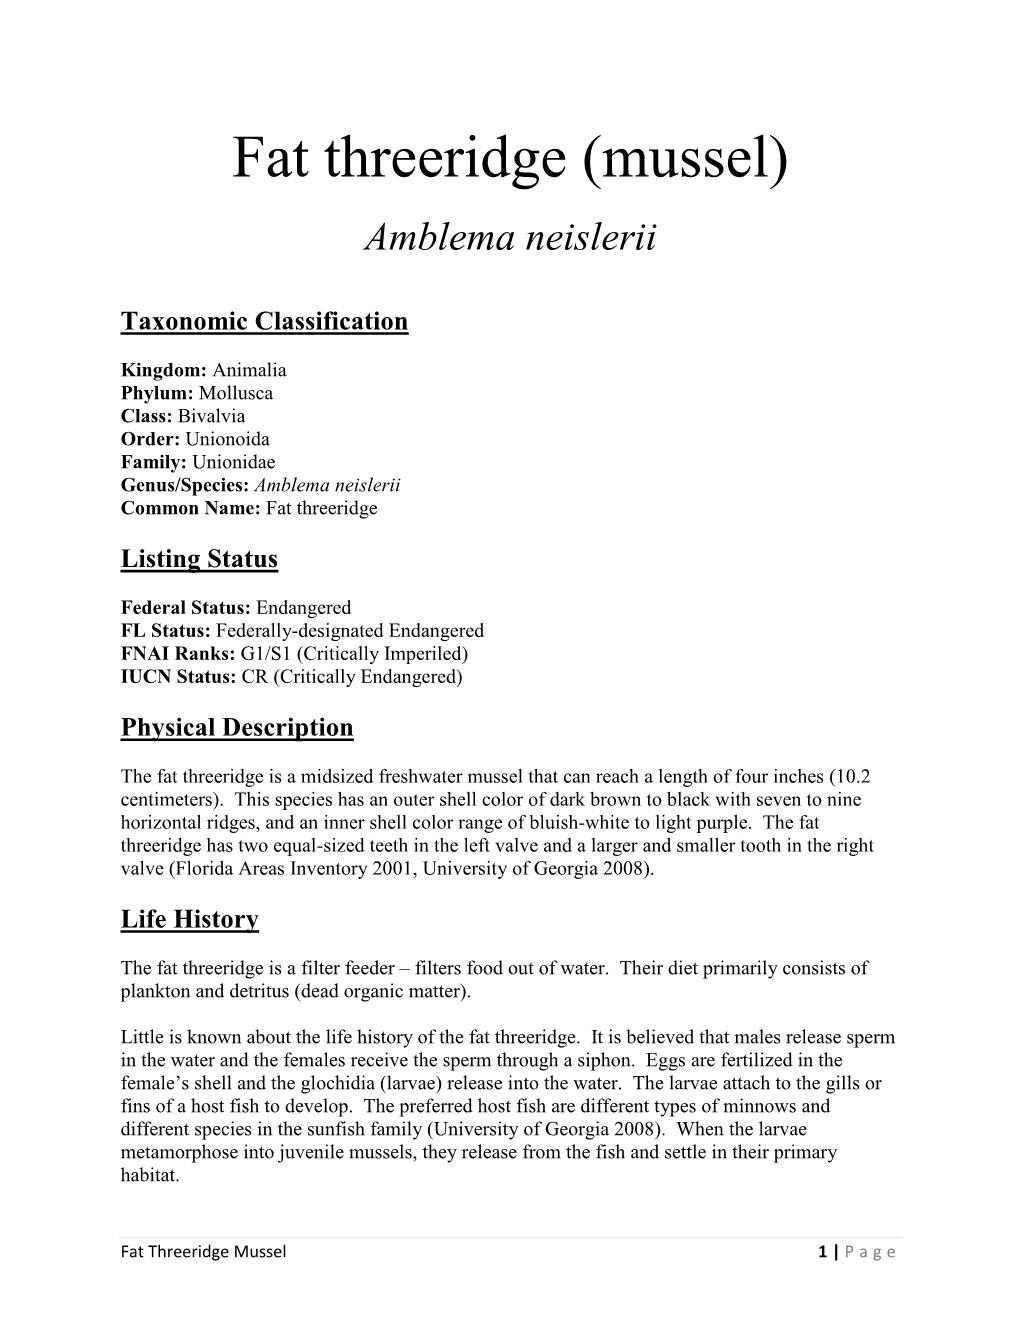 Fat Threeridge (Mussel)